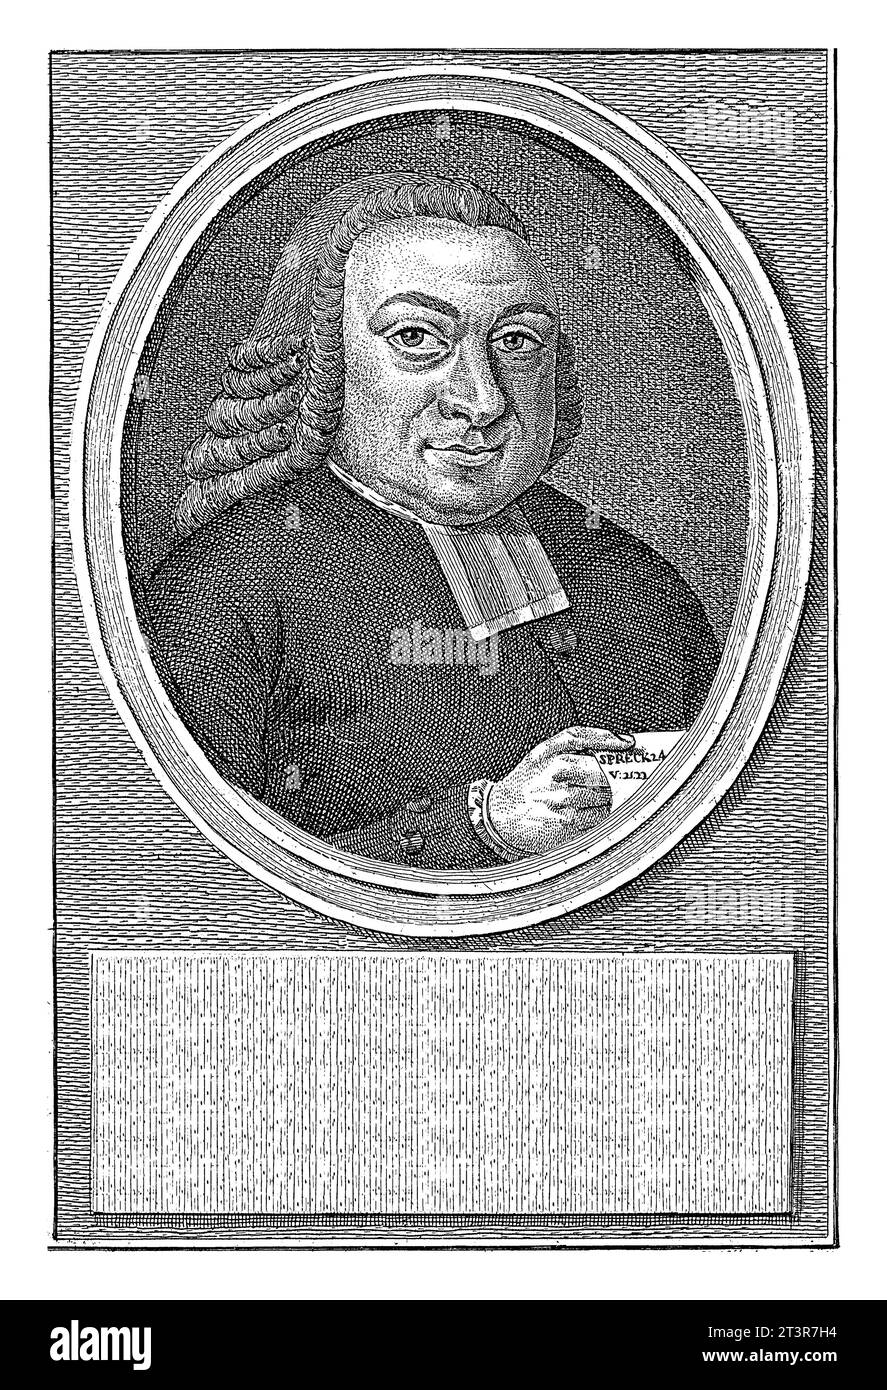 Portrait of Herbertus de Haas, Joannes Hulstkamp, after Adriaan Boon, 1785 Herbertus de Haas with a leaf in his left hand with the text. Stock Photo